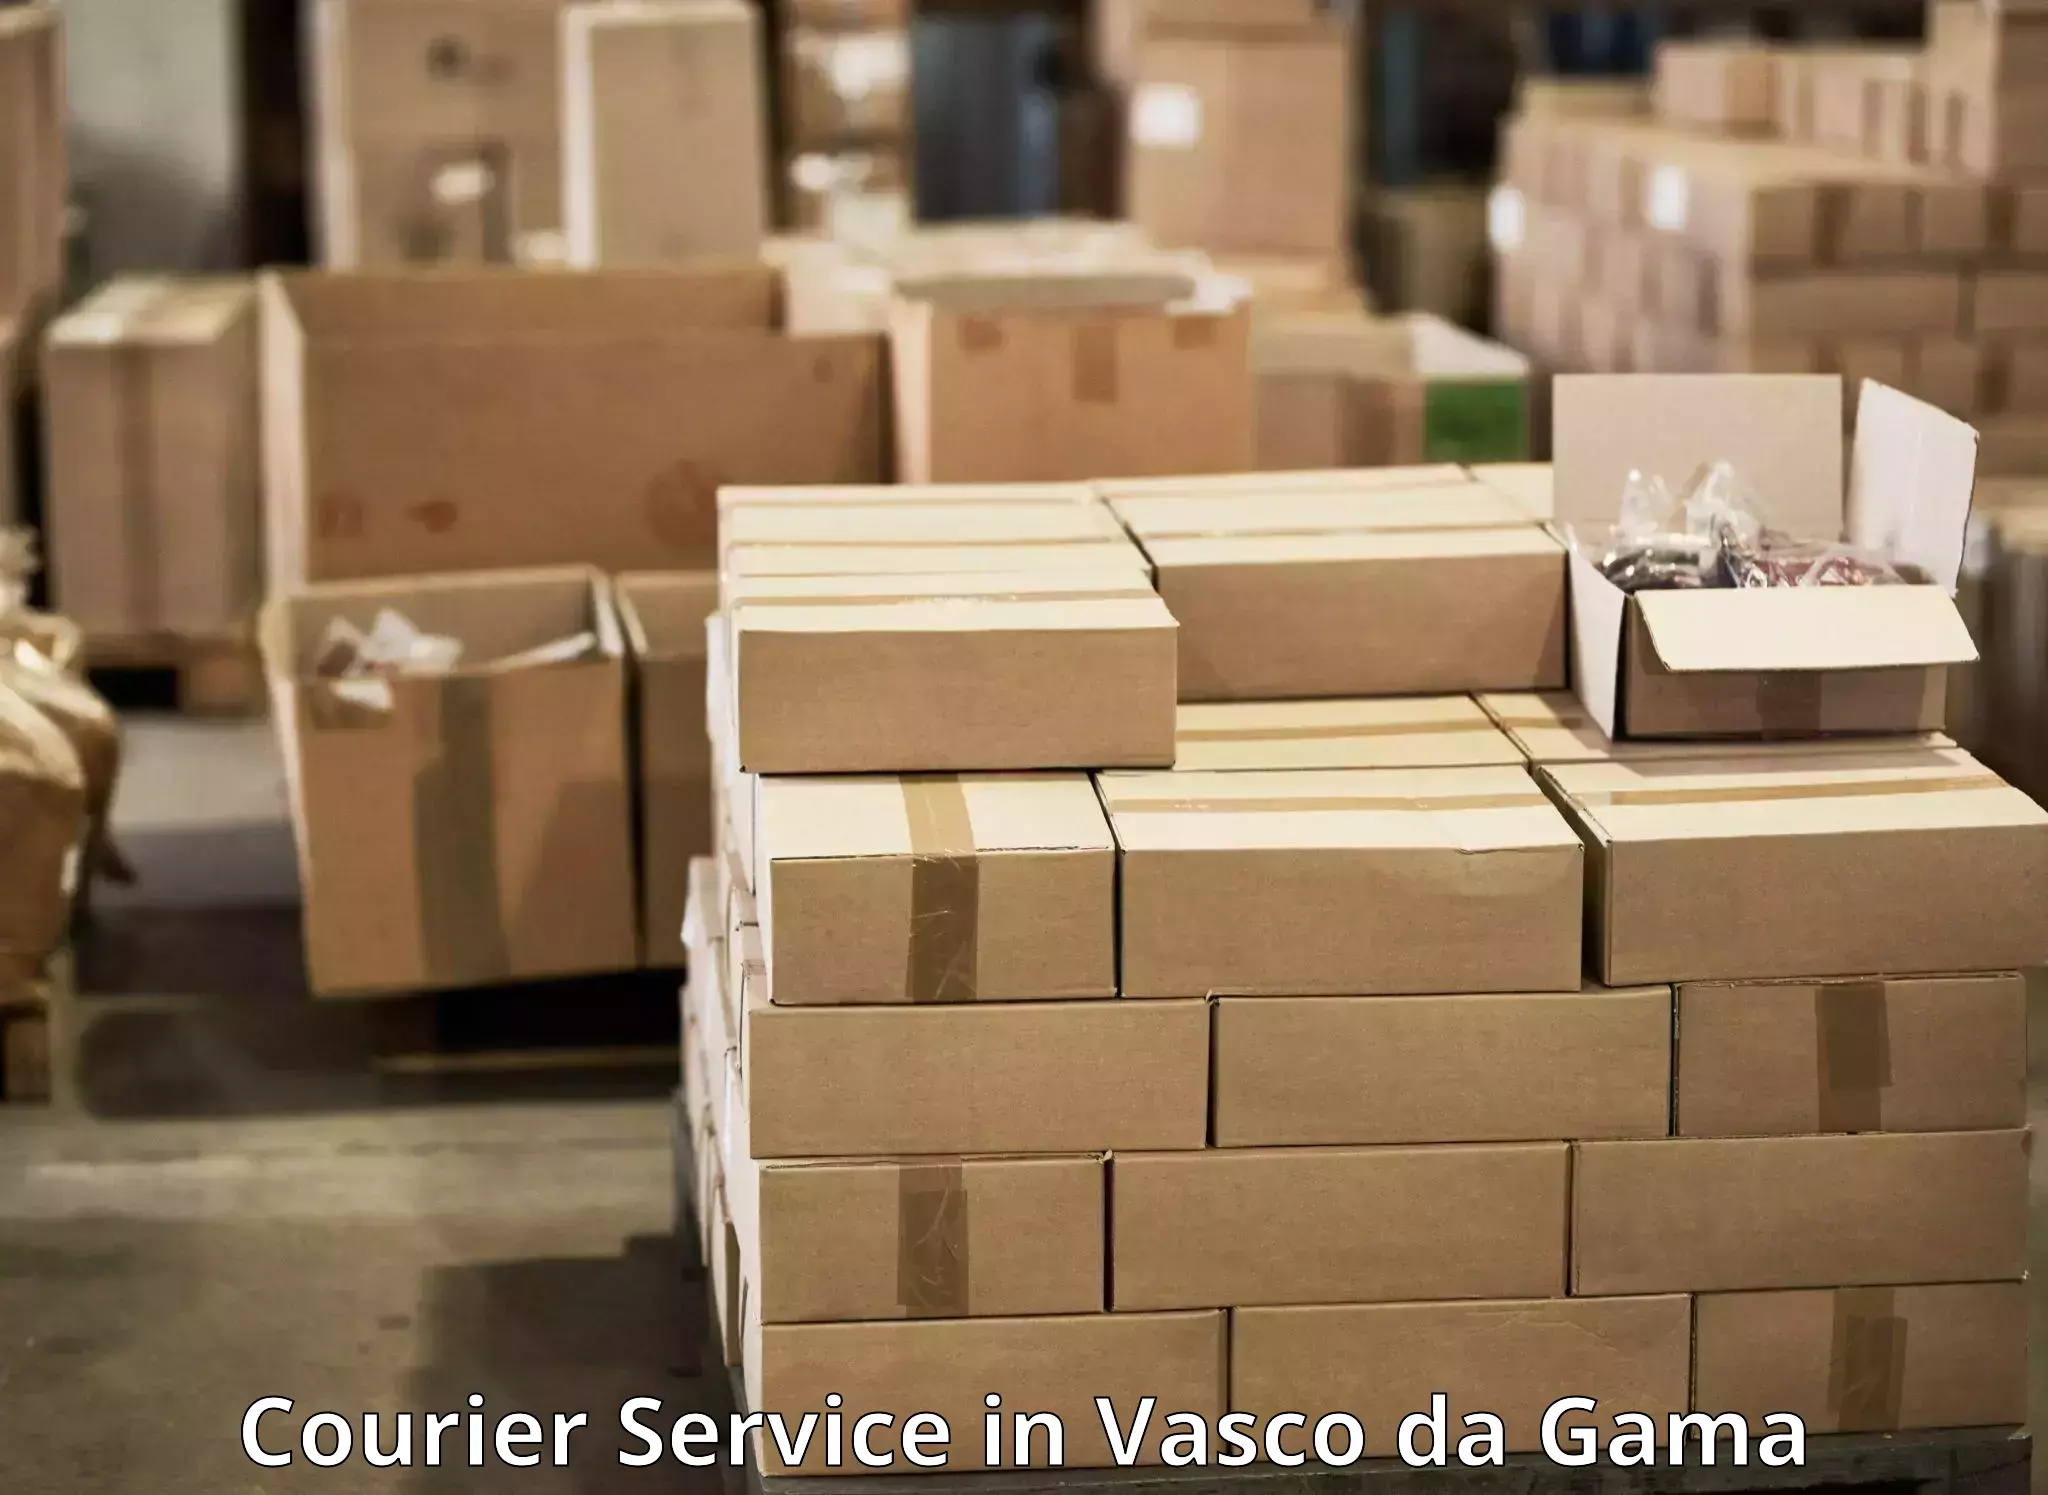 Track and trace shipping in Vasco da Gama